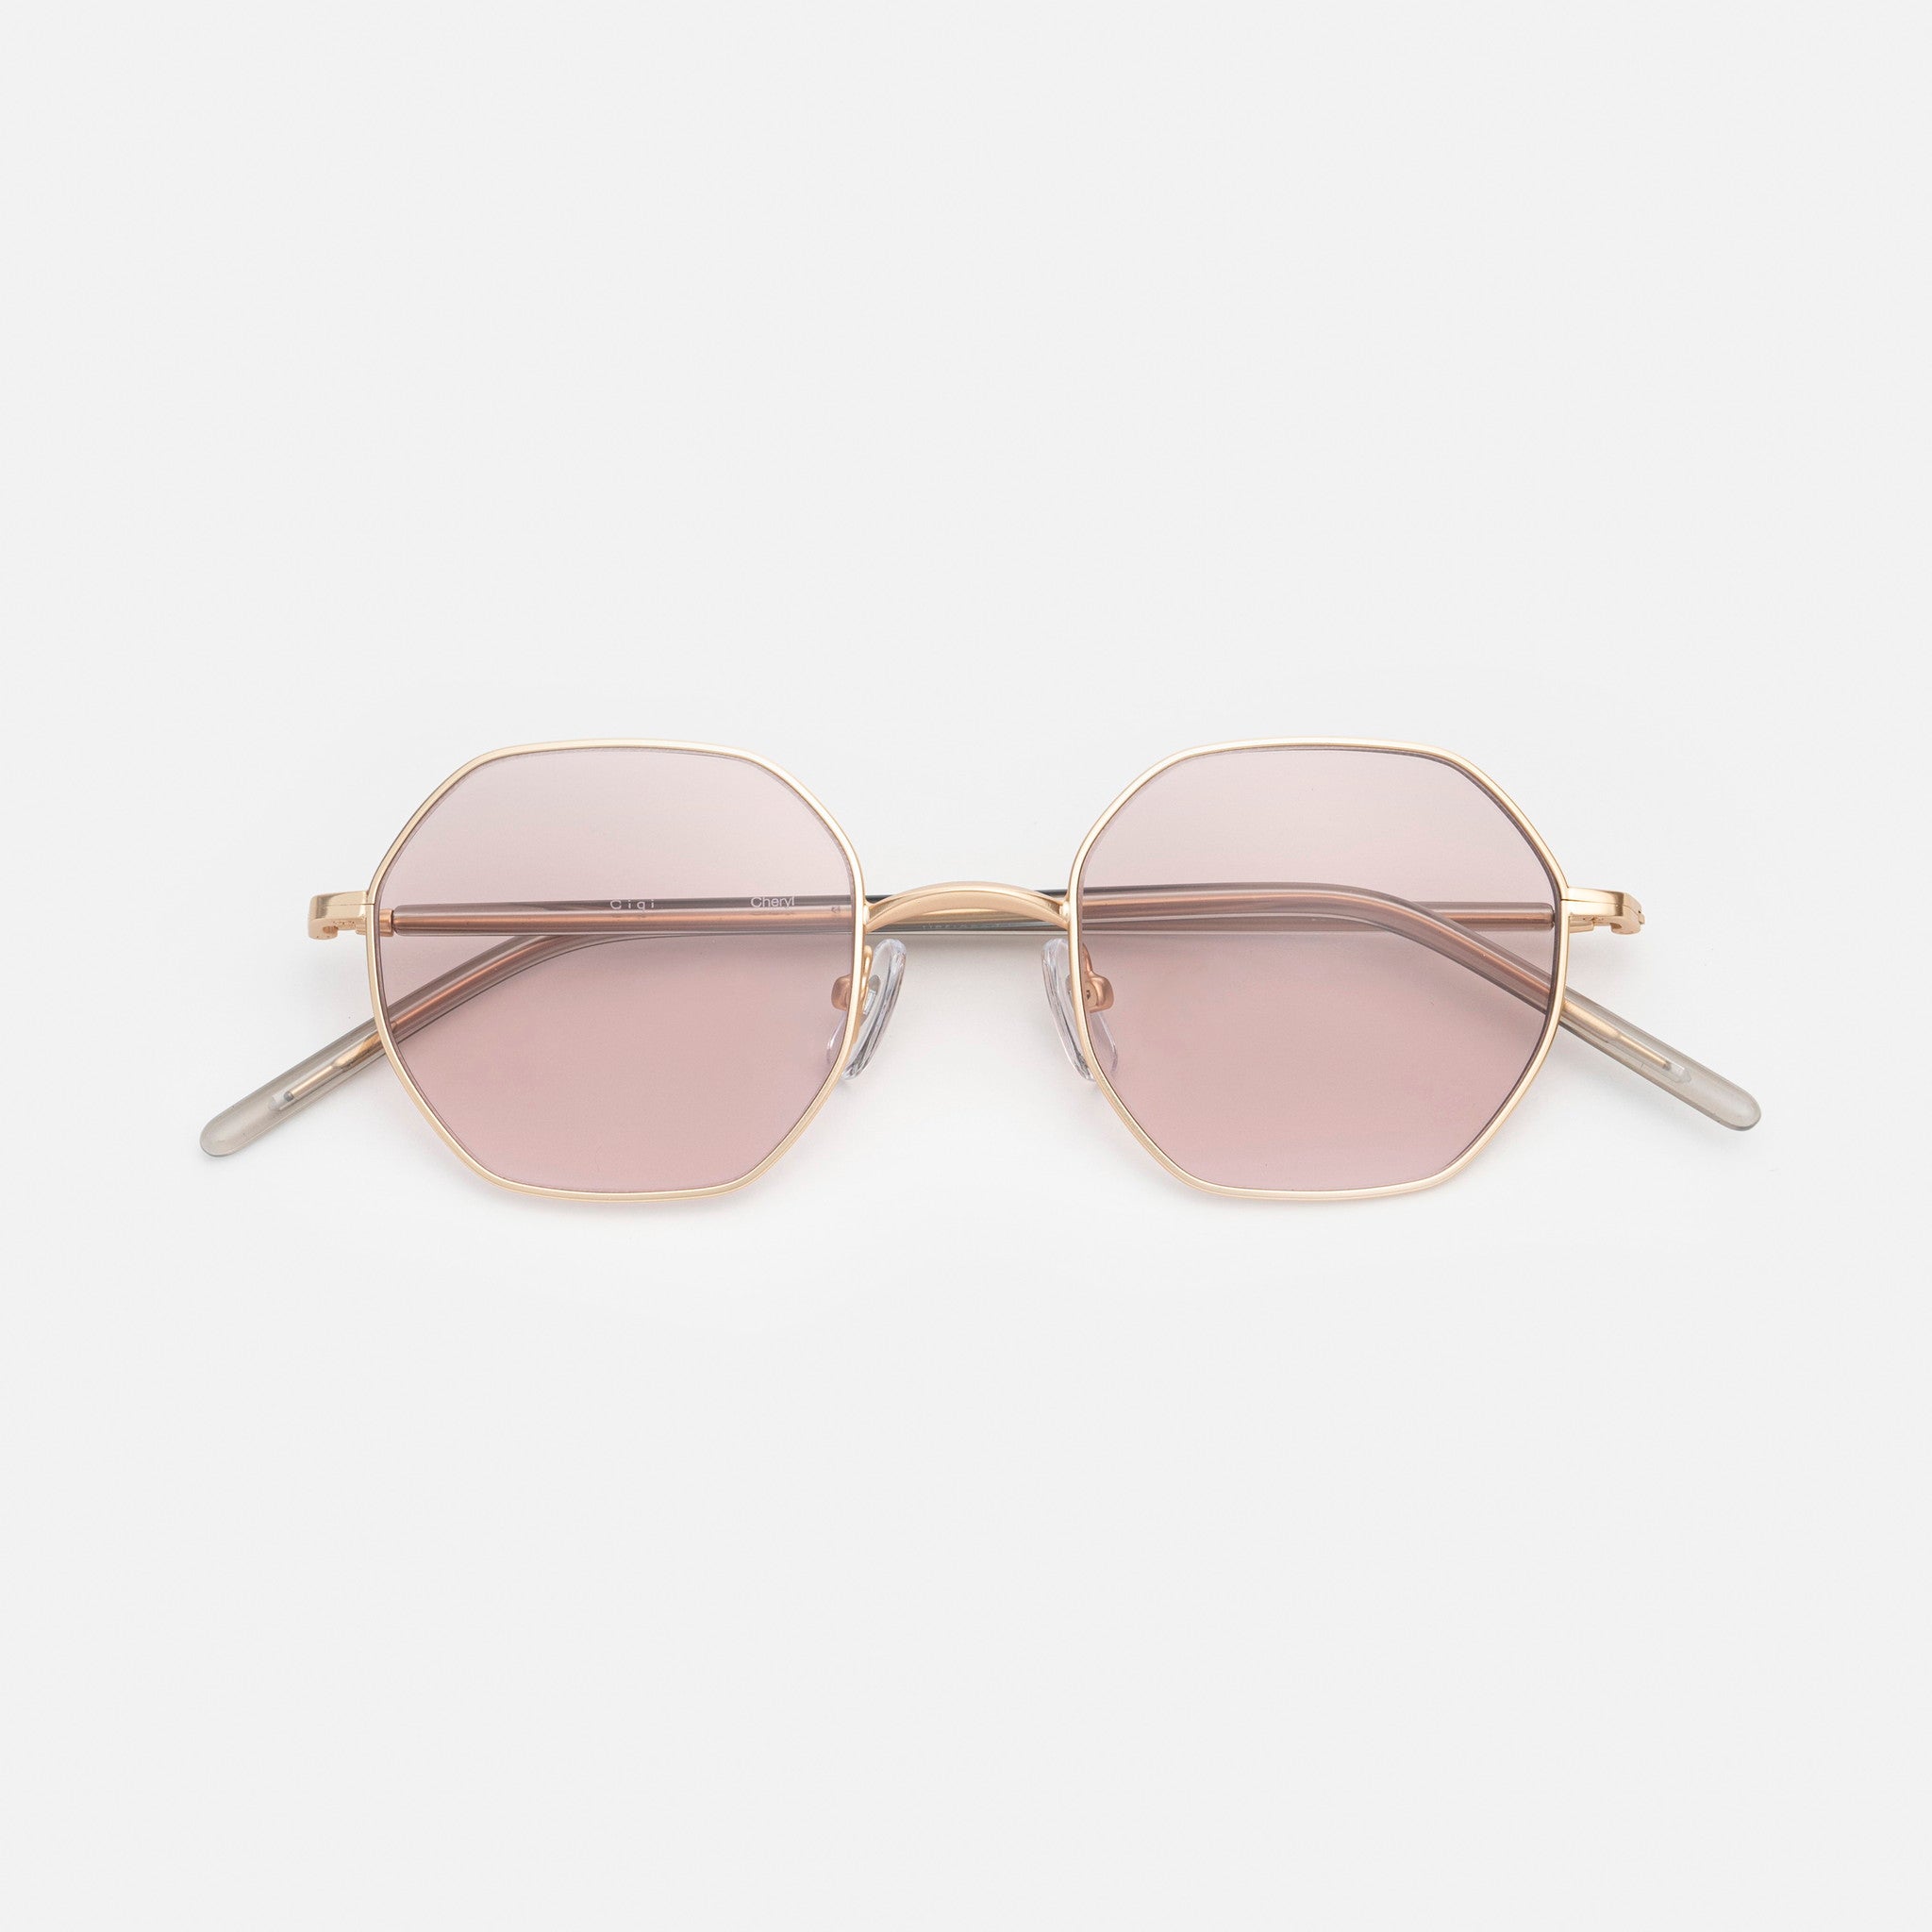 【Ciqi】CHERYL サングラス Sky Gray  Pink Lens sunglasses(シェリル スカイグレー ピンクレンズ)